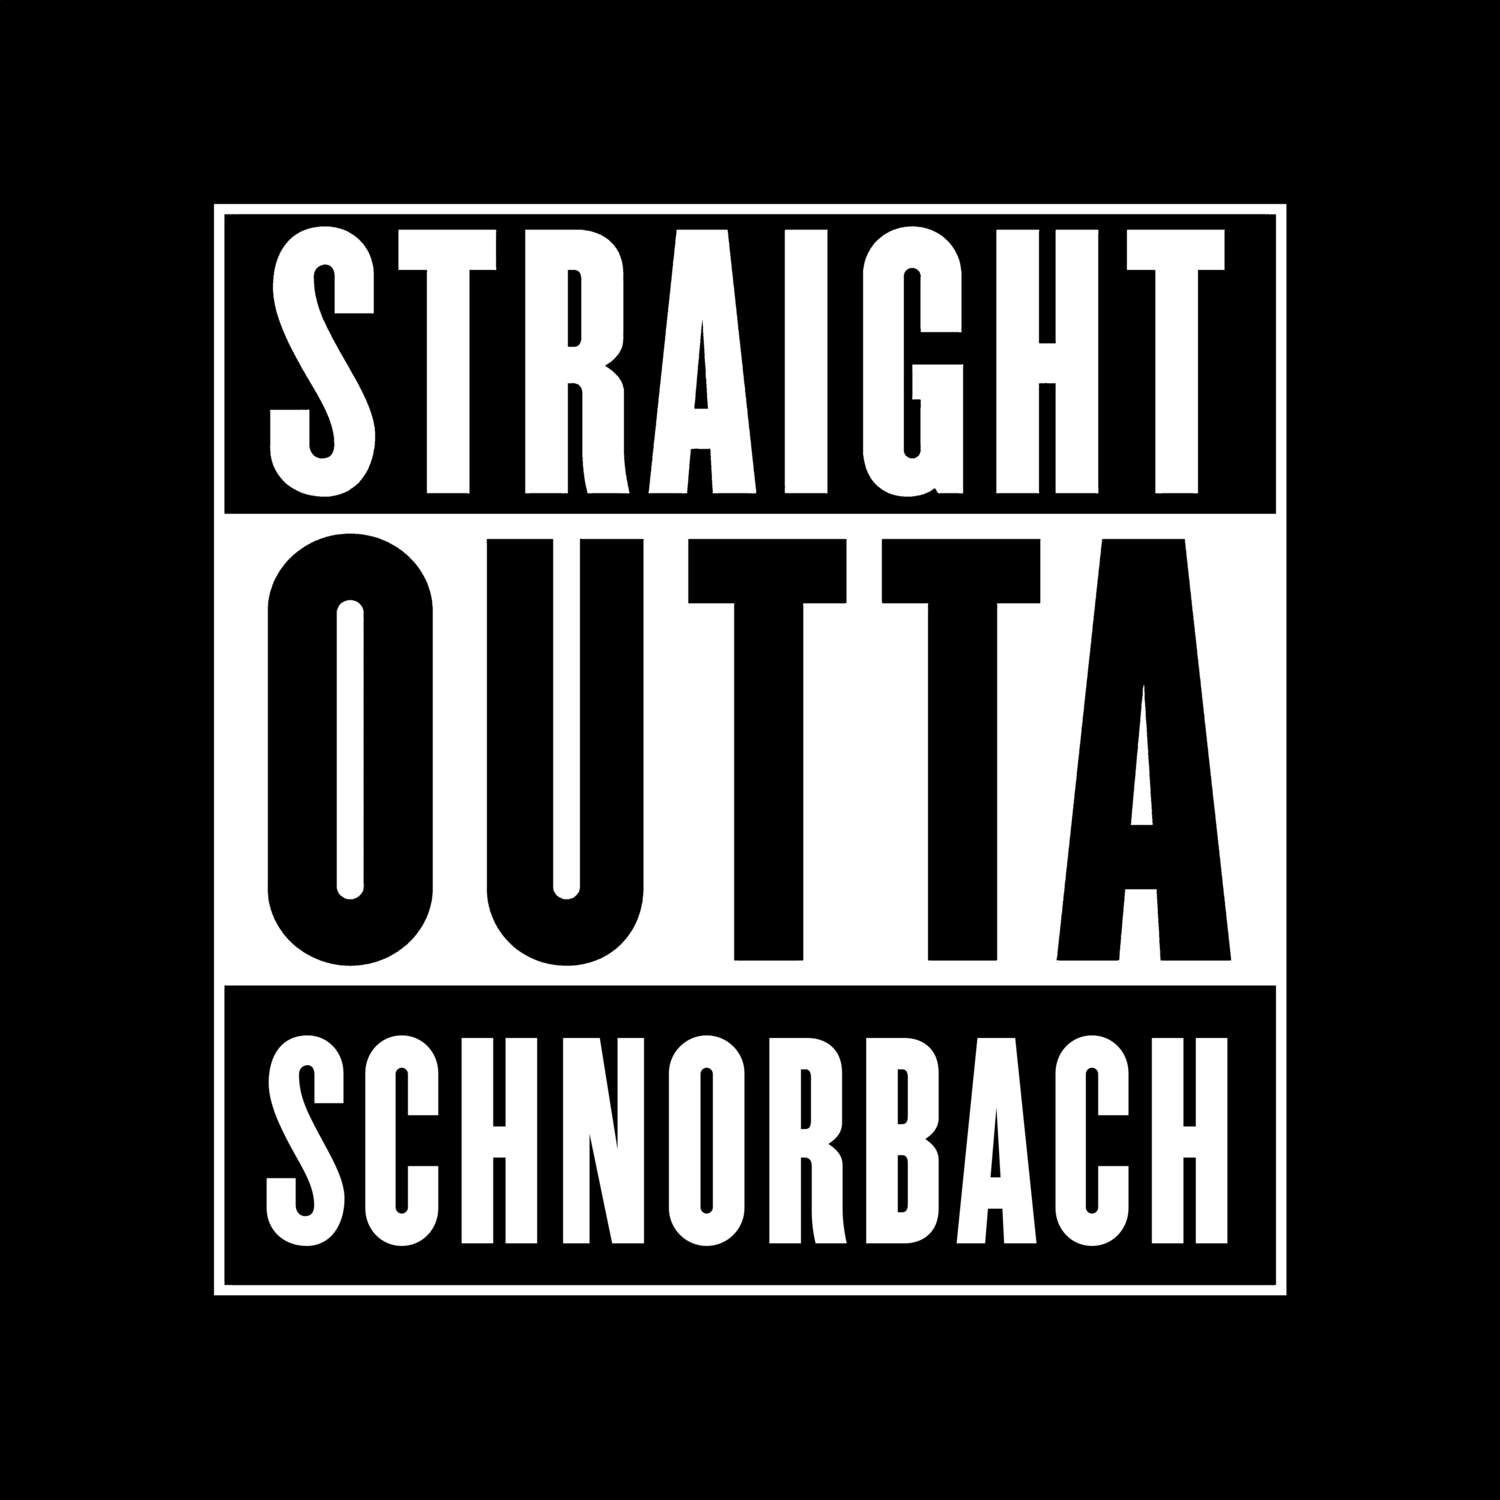 Schnorbach T-Shirt »Straight Outta«